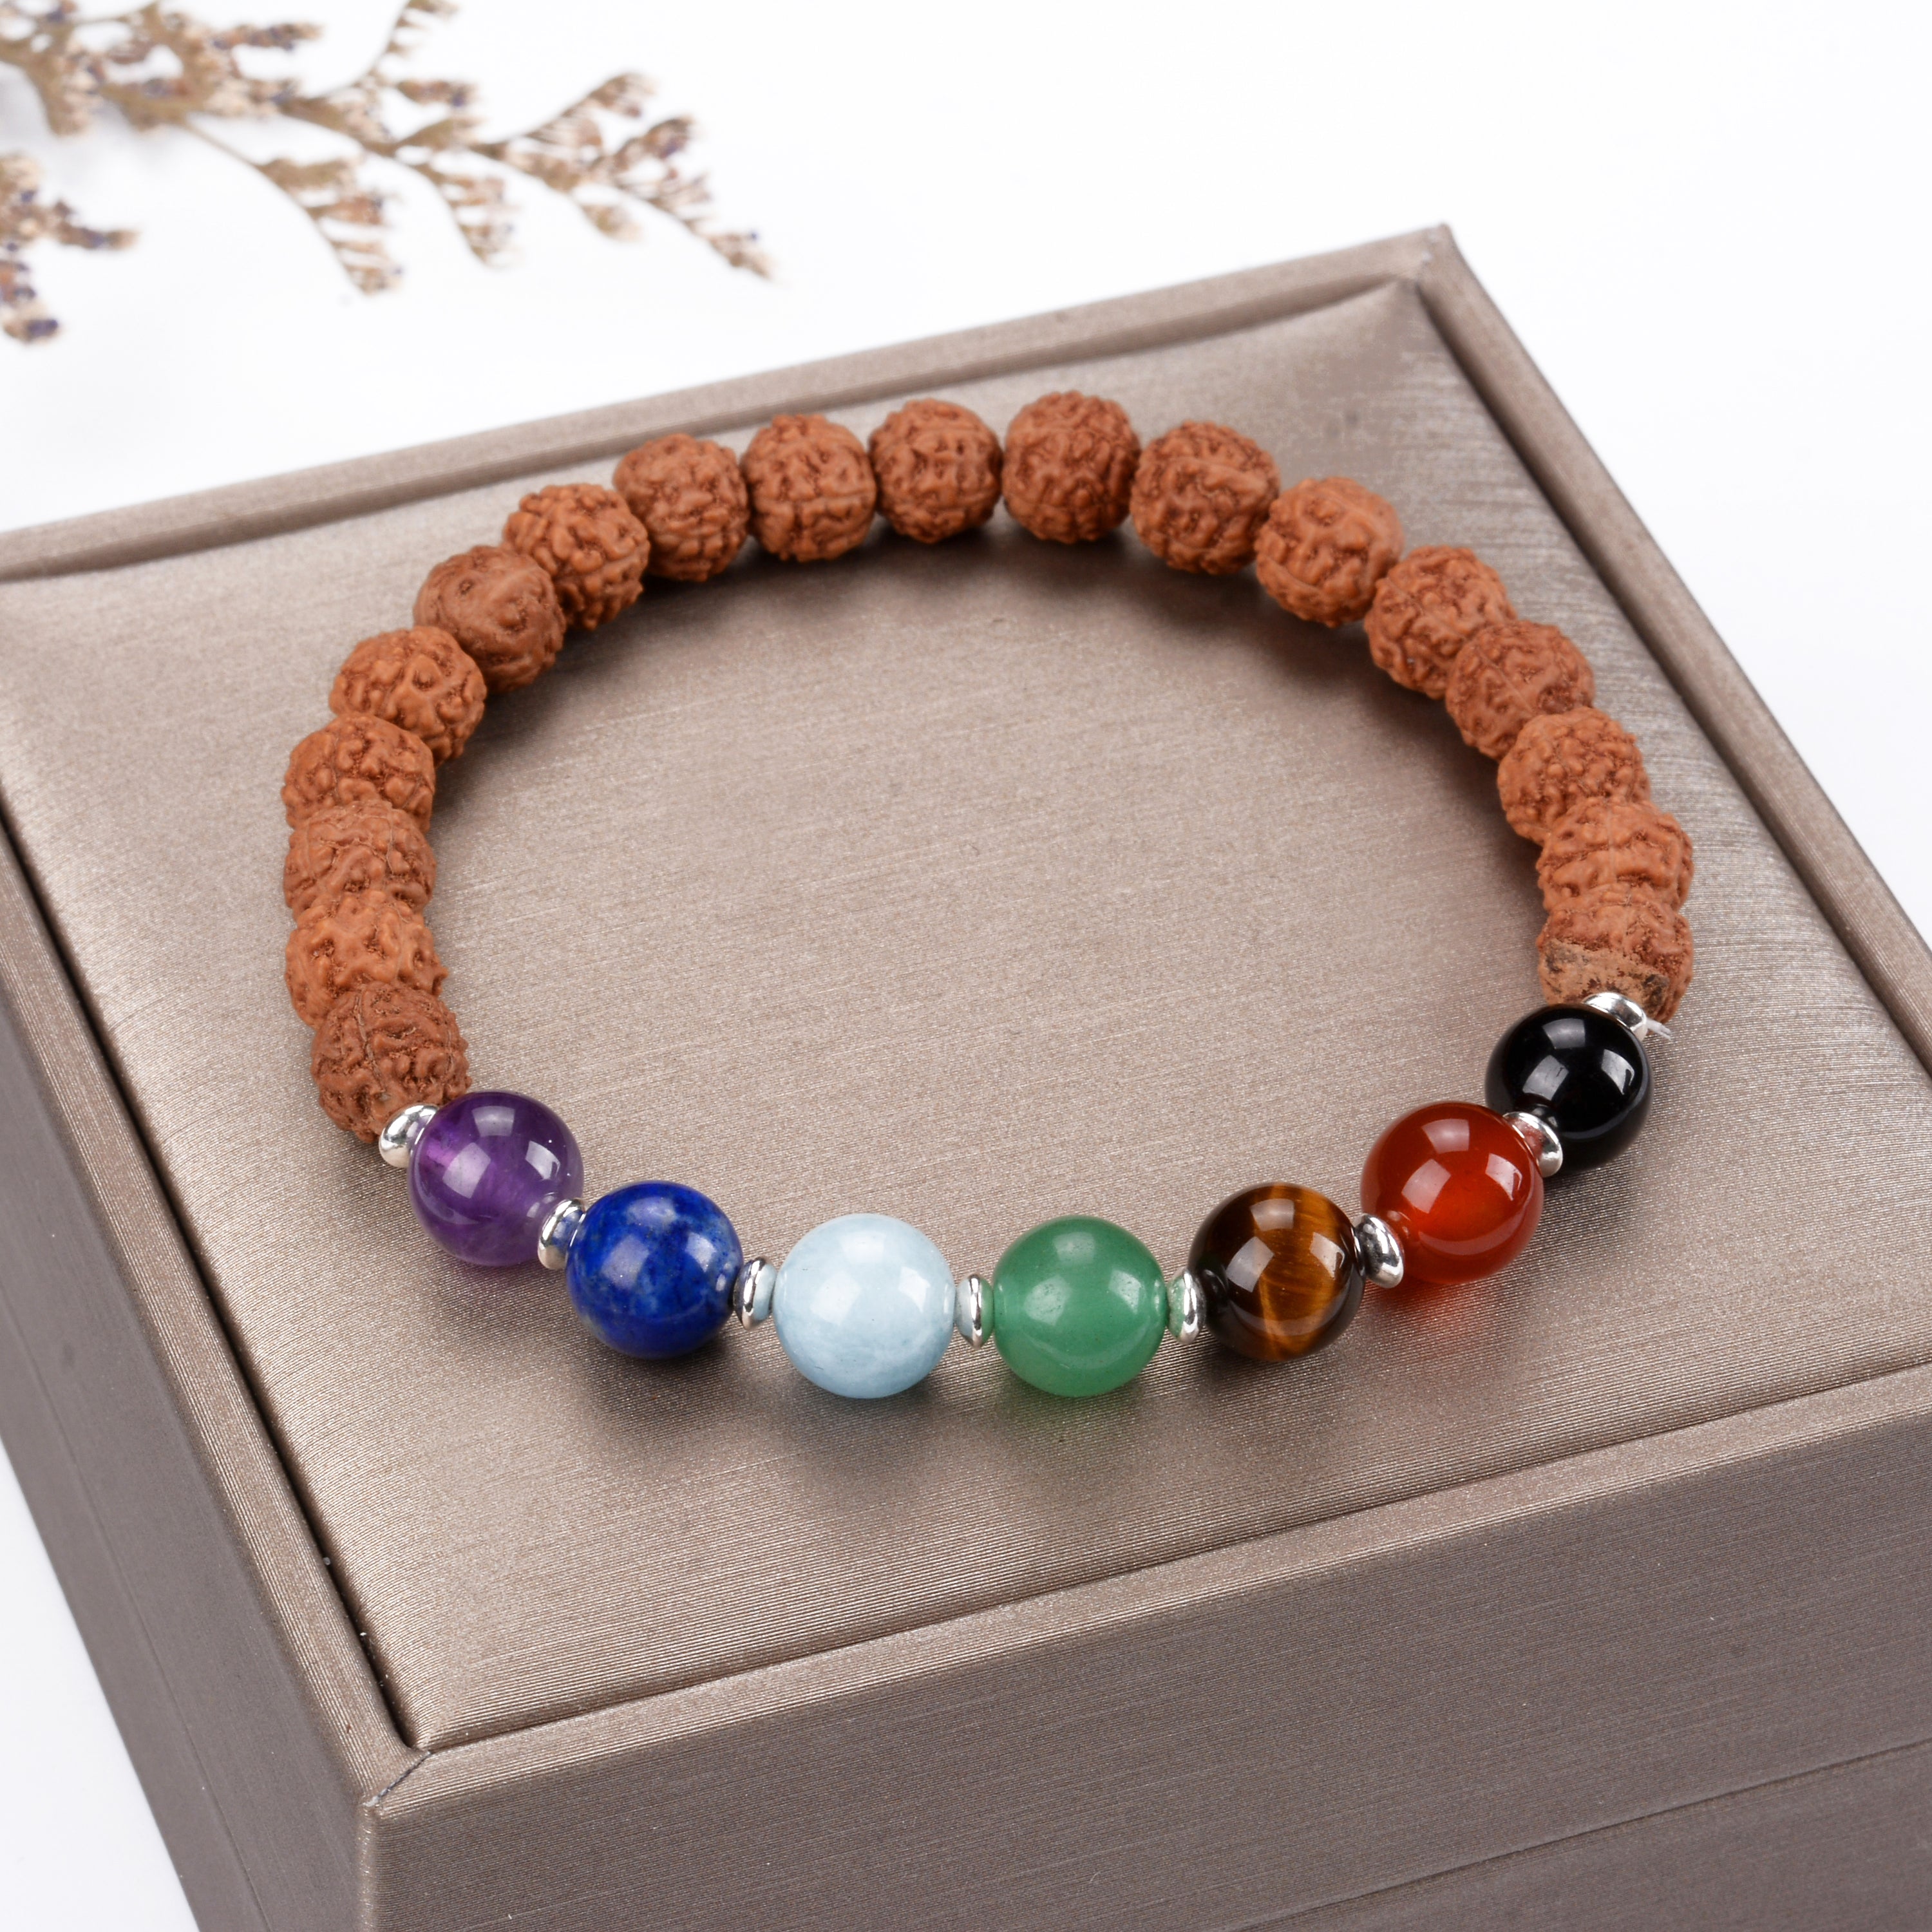 7 Chakra with Rudraksha Beads Bracelet